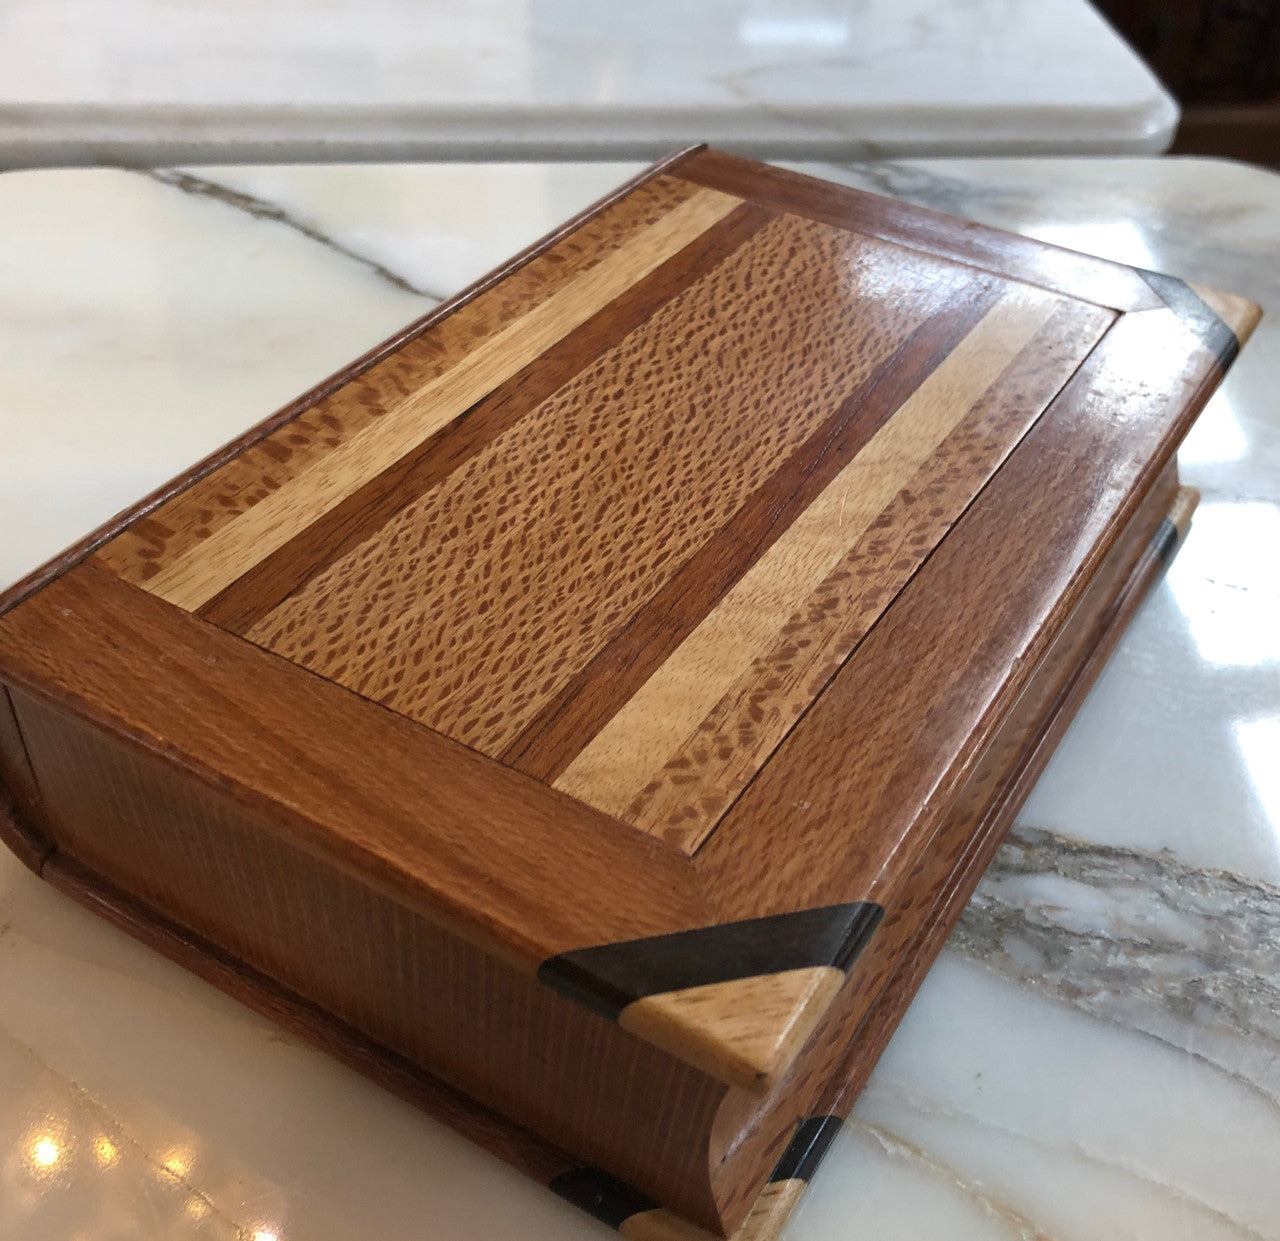 Rare Australian Silky Oak & Cedar Book With Hidden Trinket Box